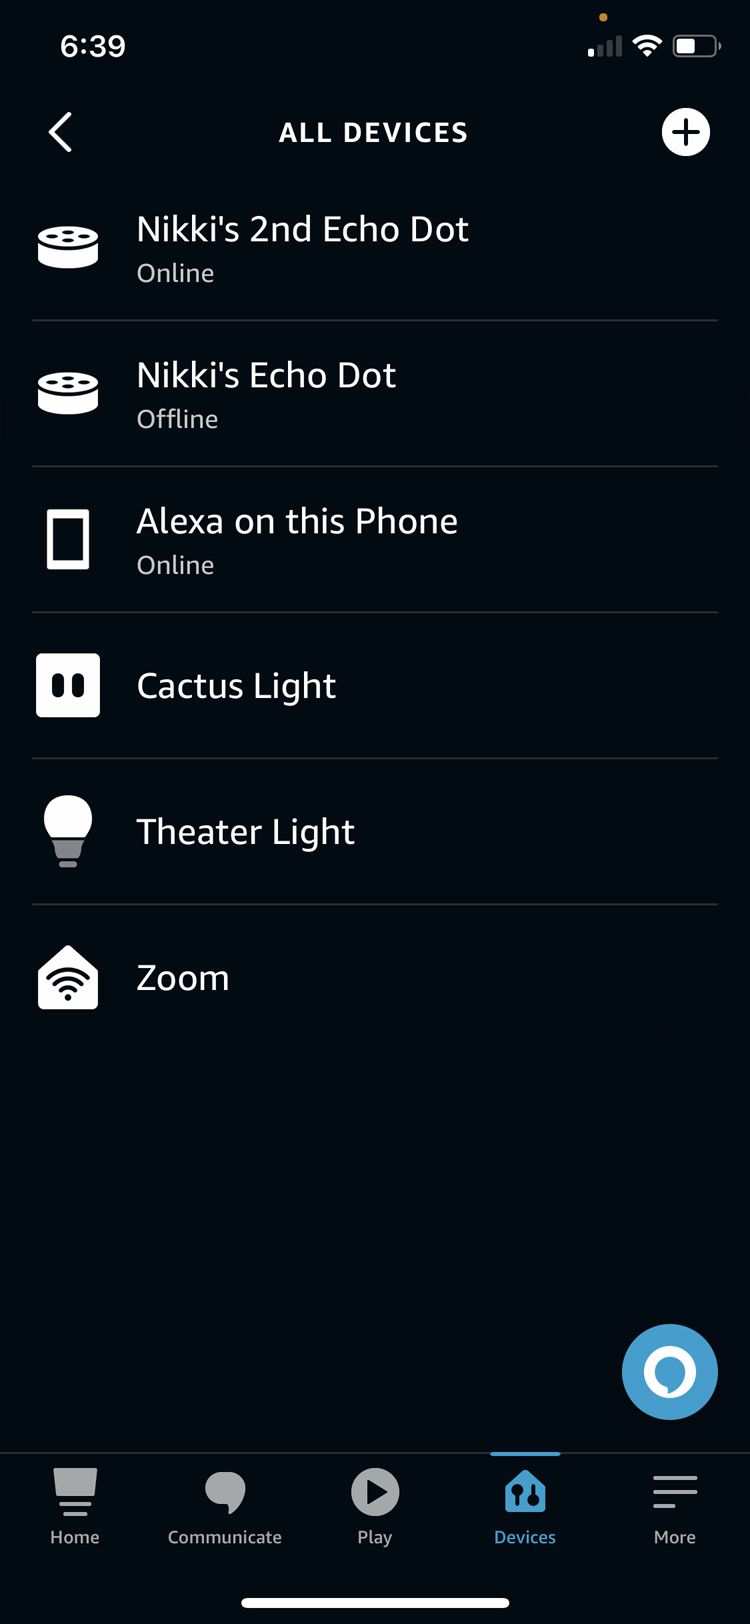 Amazon Alexa All Devices screen in Alexa app